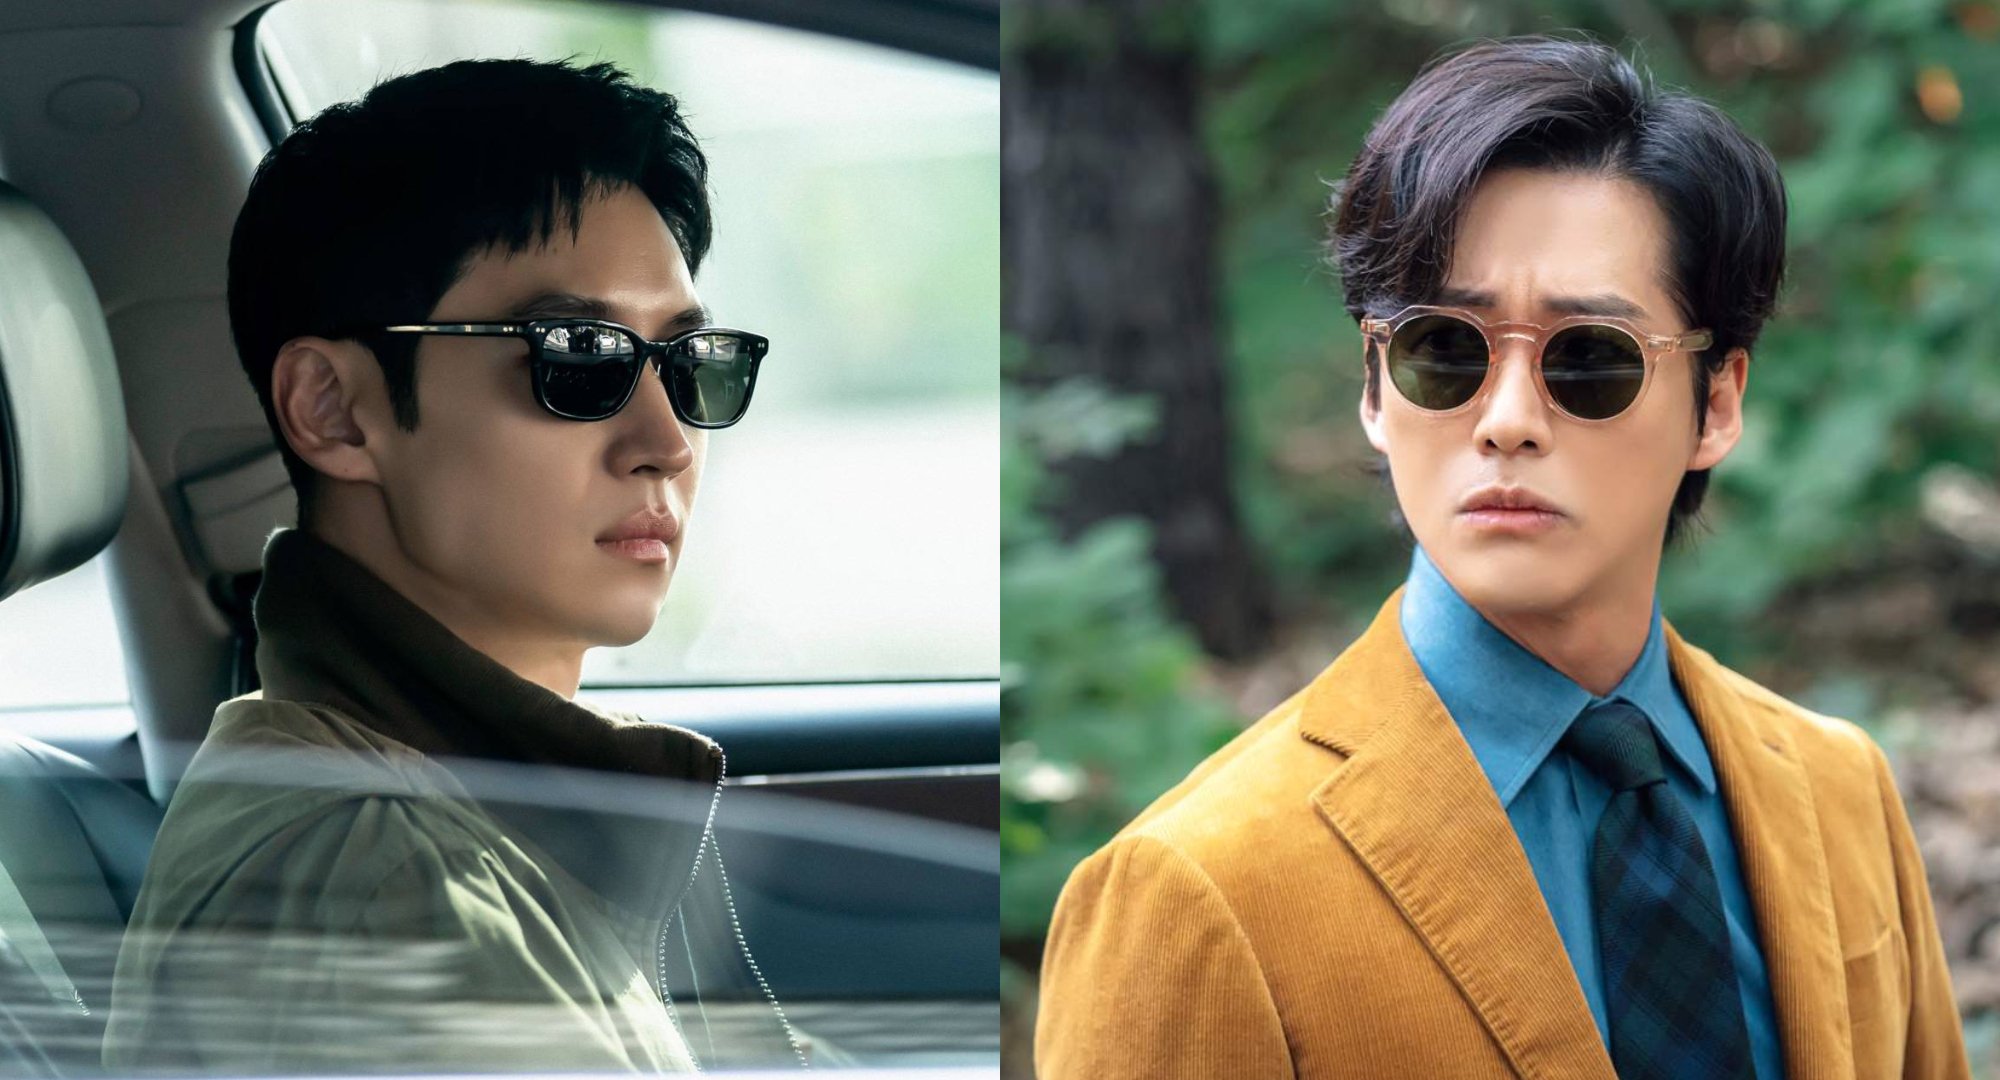 'Taxi Driver 2' character Do-gi and 'One Dollar Lawyer' character Ji-hun.